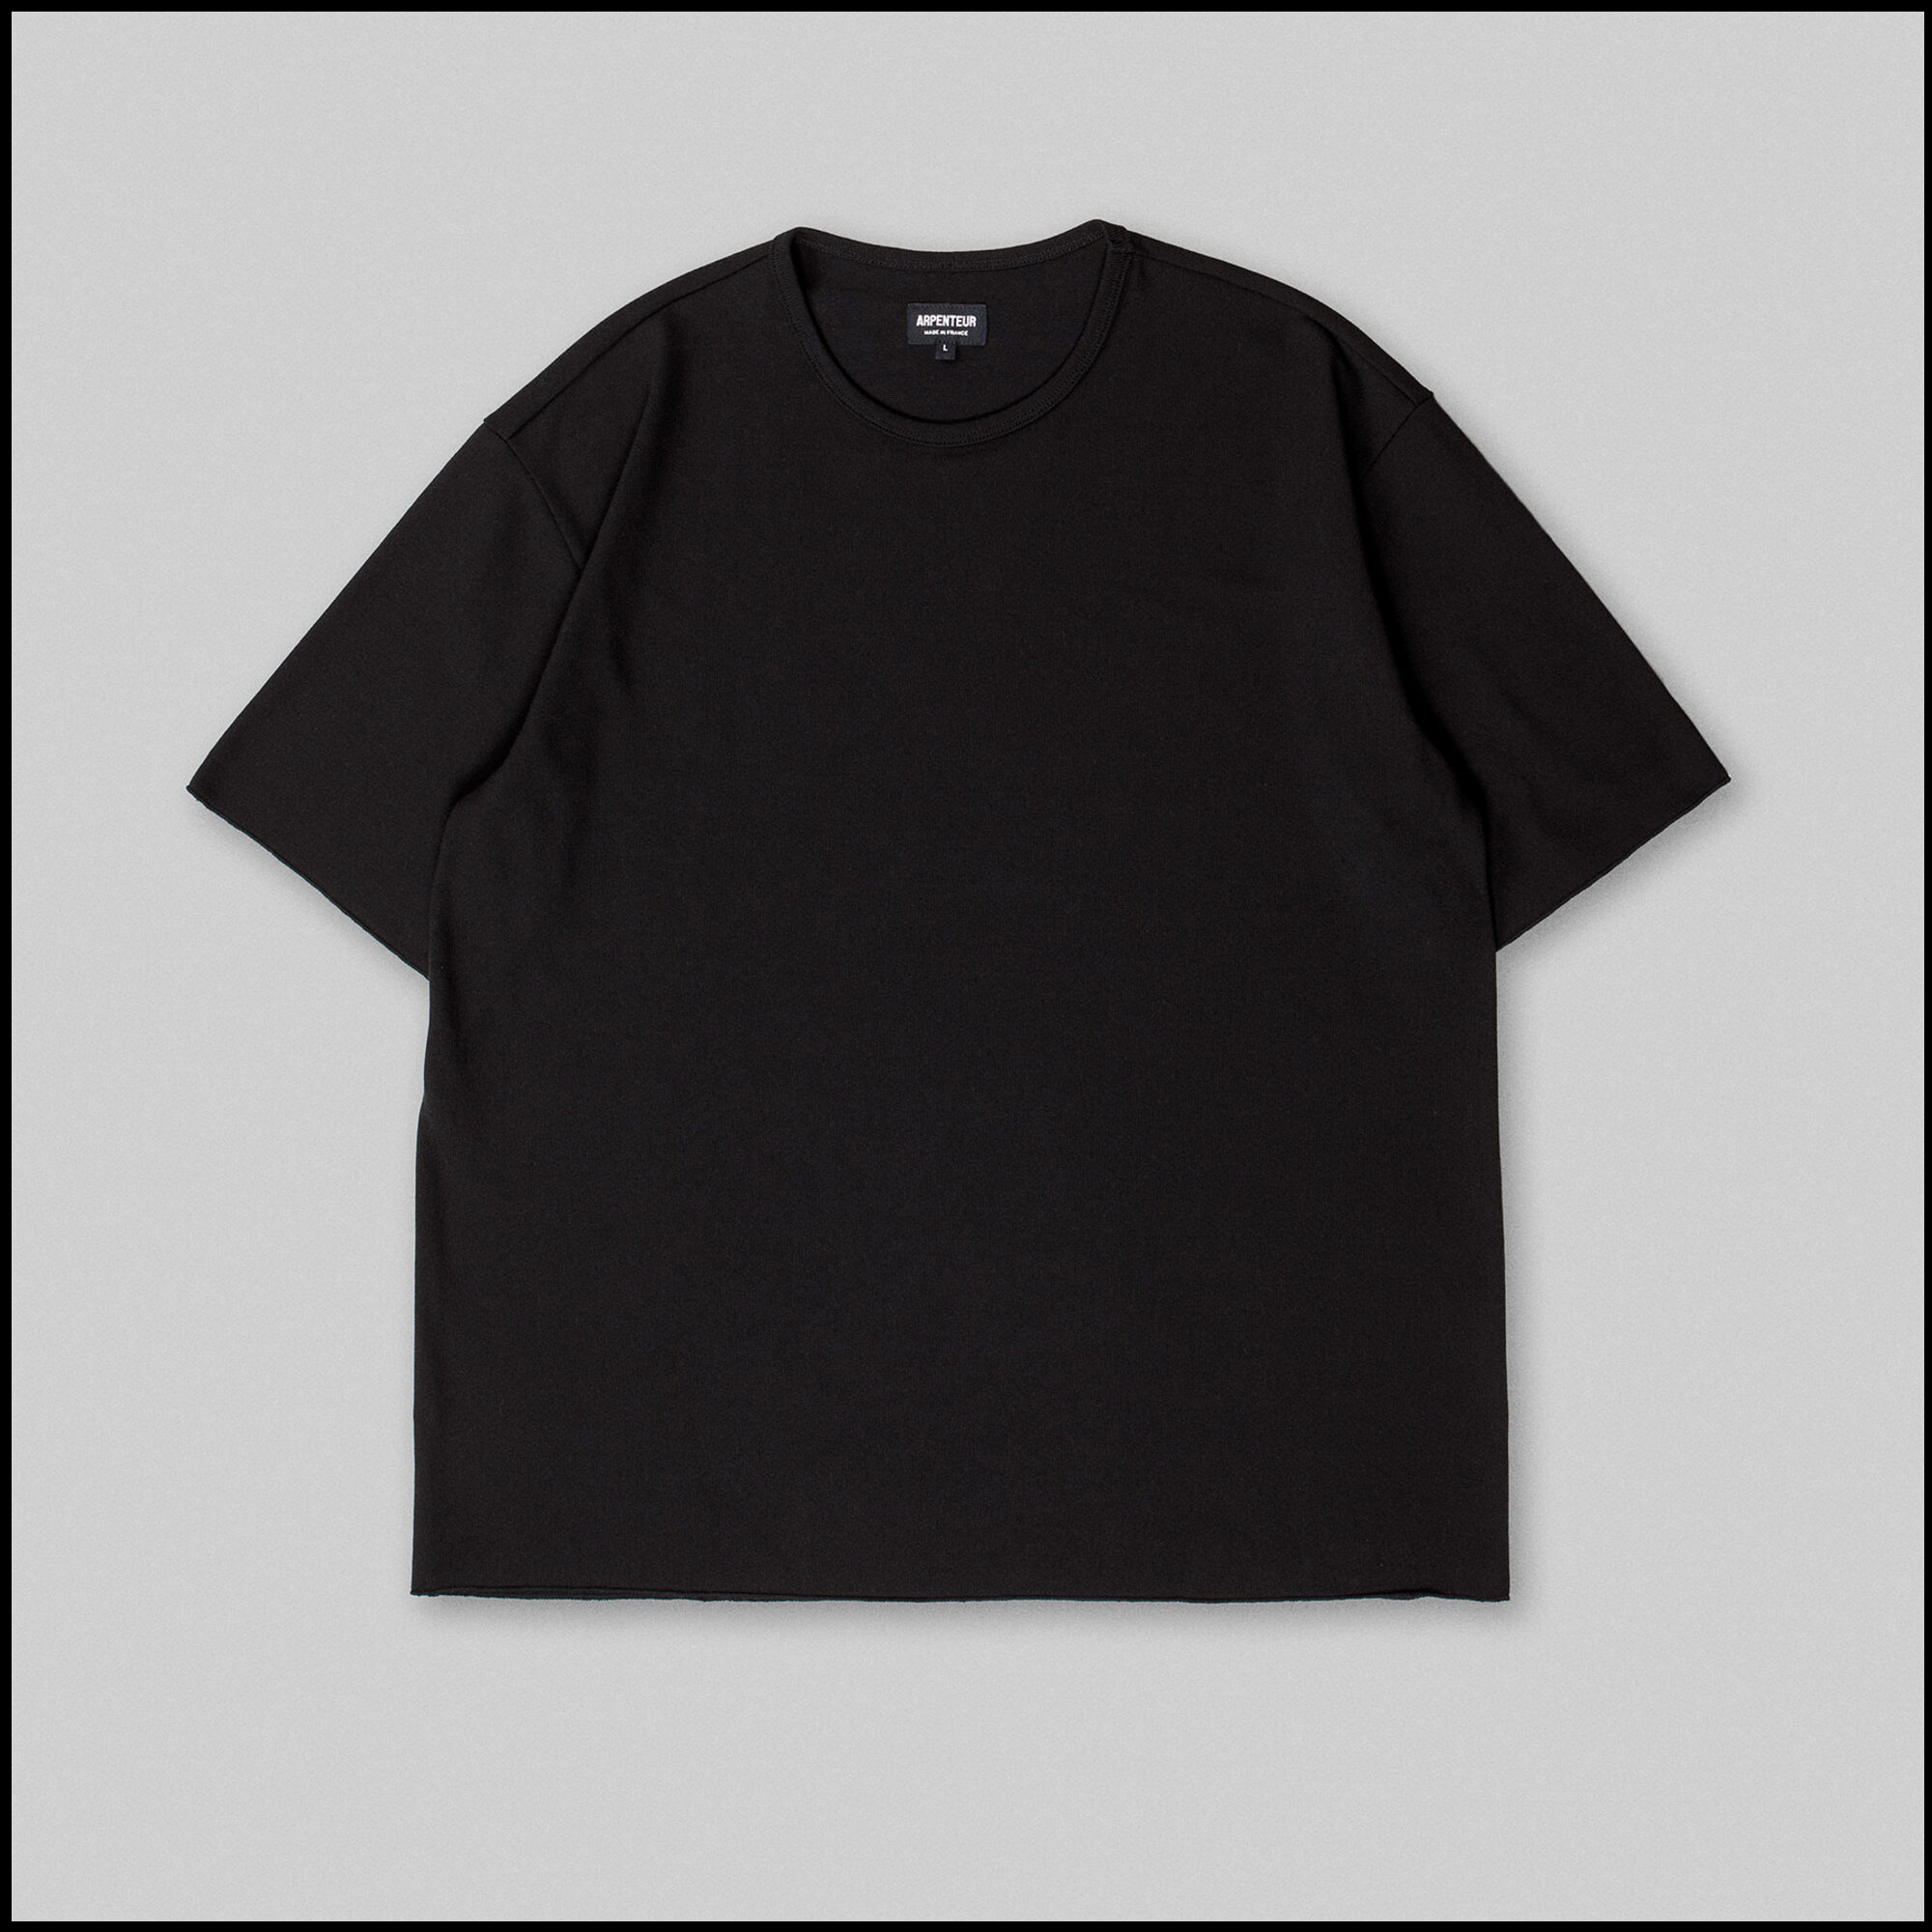 PONTUS t-shirt by Arpenteur in Black color